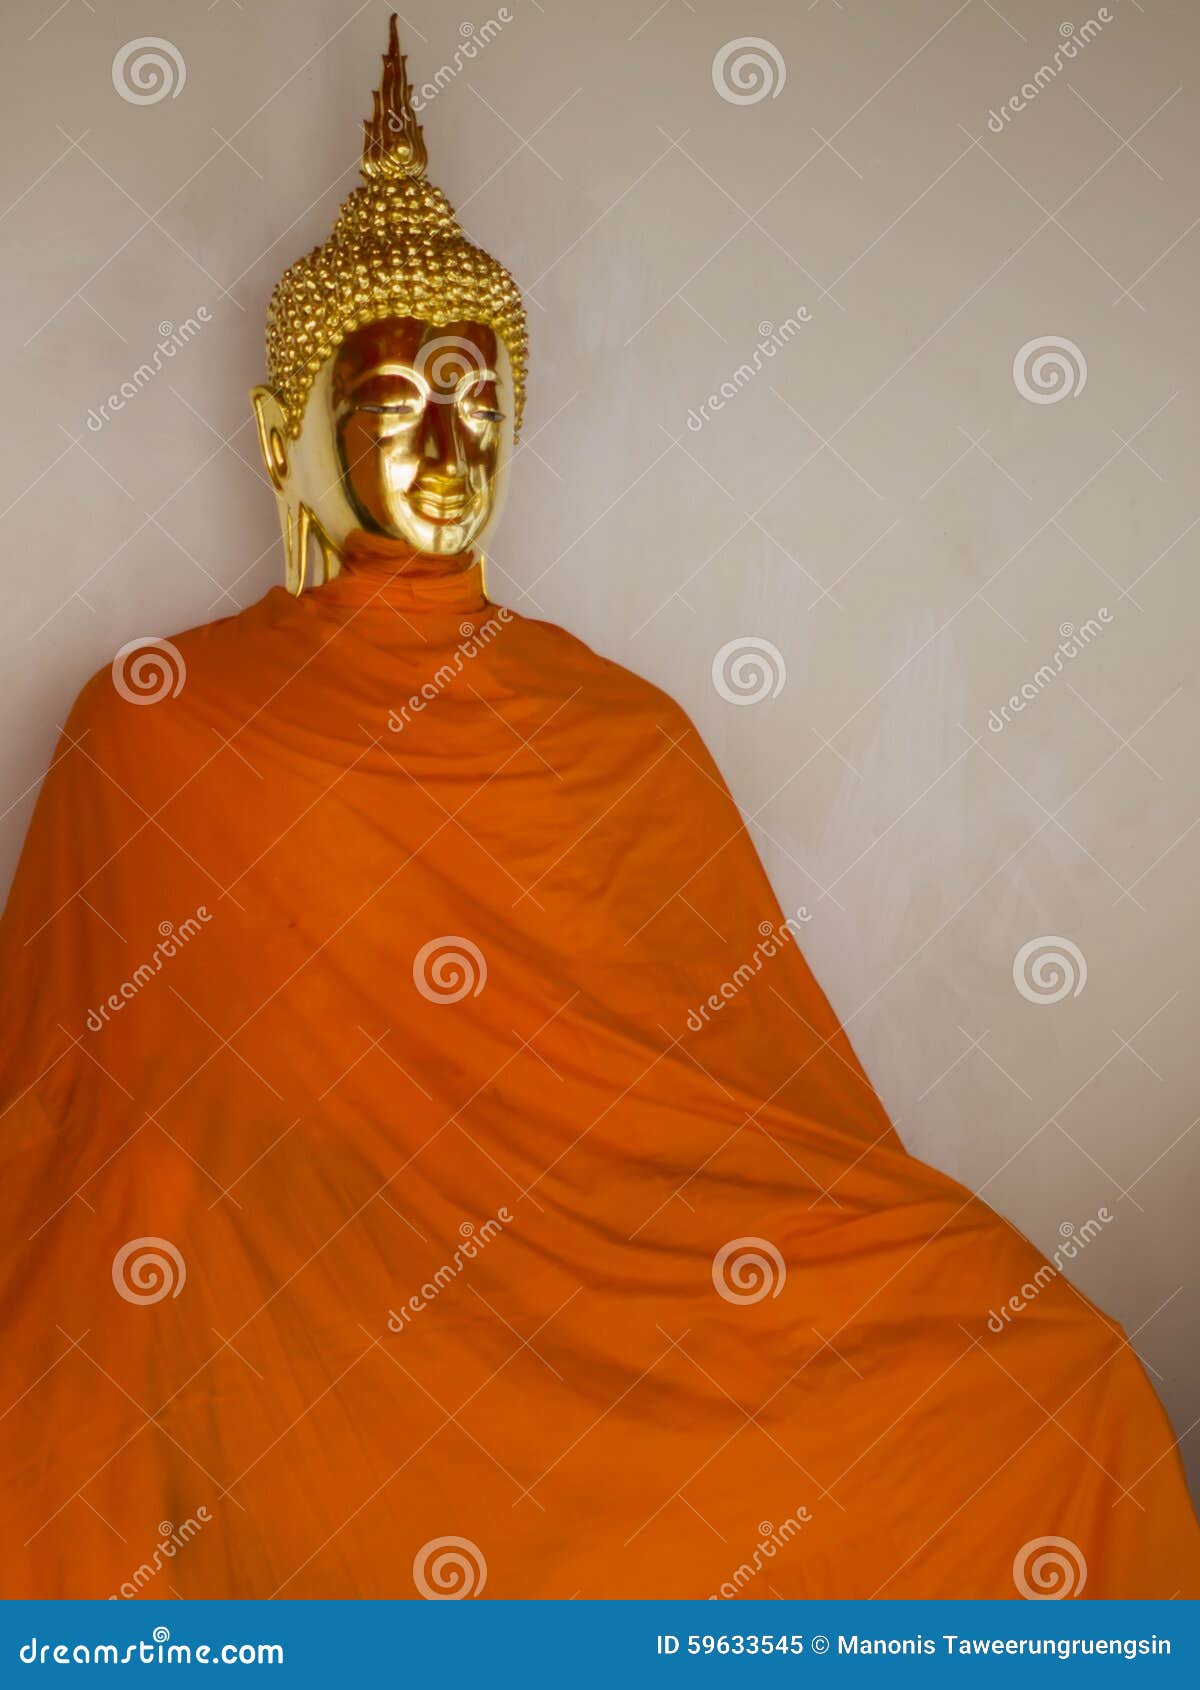 Golden Buddha Blanket With Yellow Robe Stock Image Image Of Peaceful